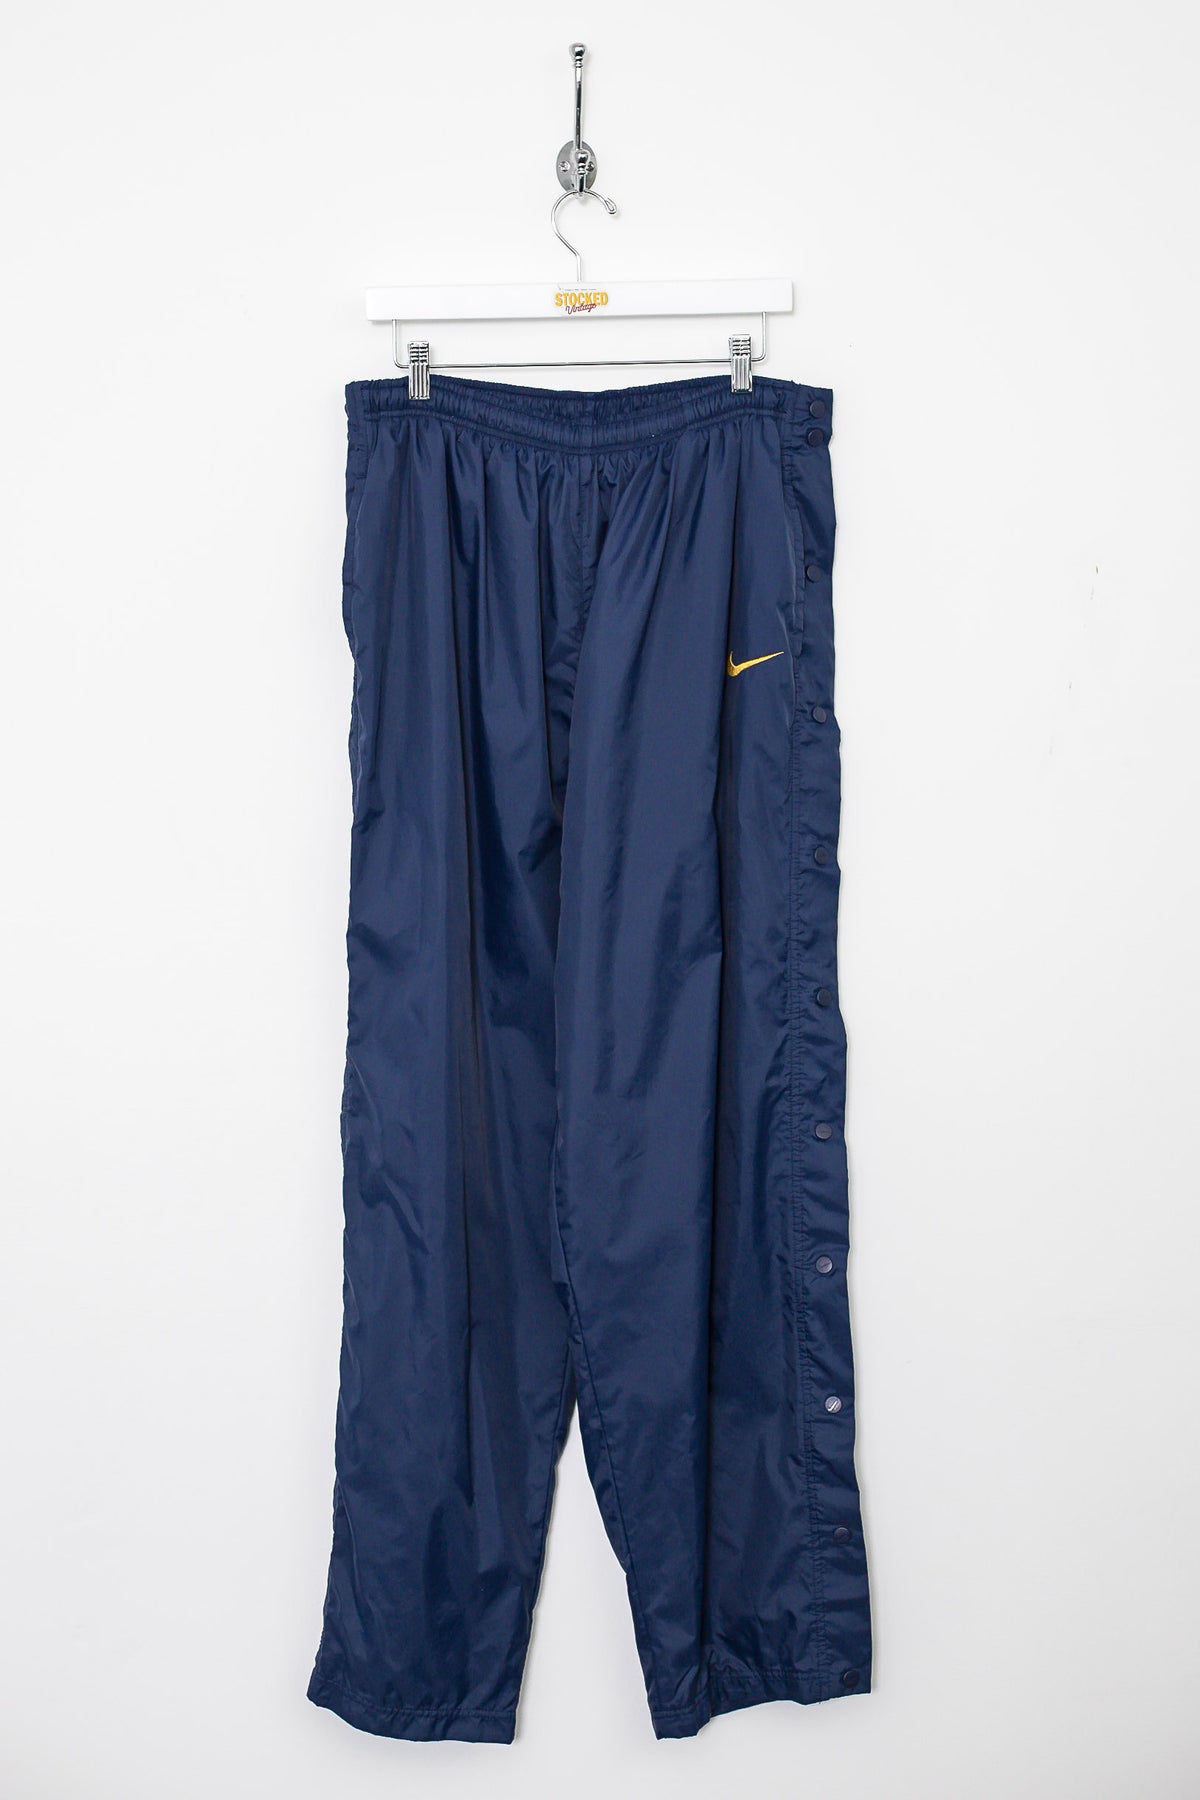 Vintage Nike Wind Pants  American vintage clothing, 90's outfits